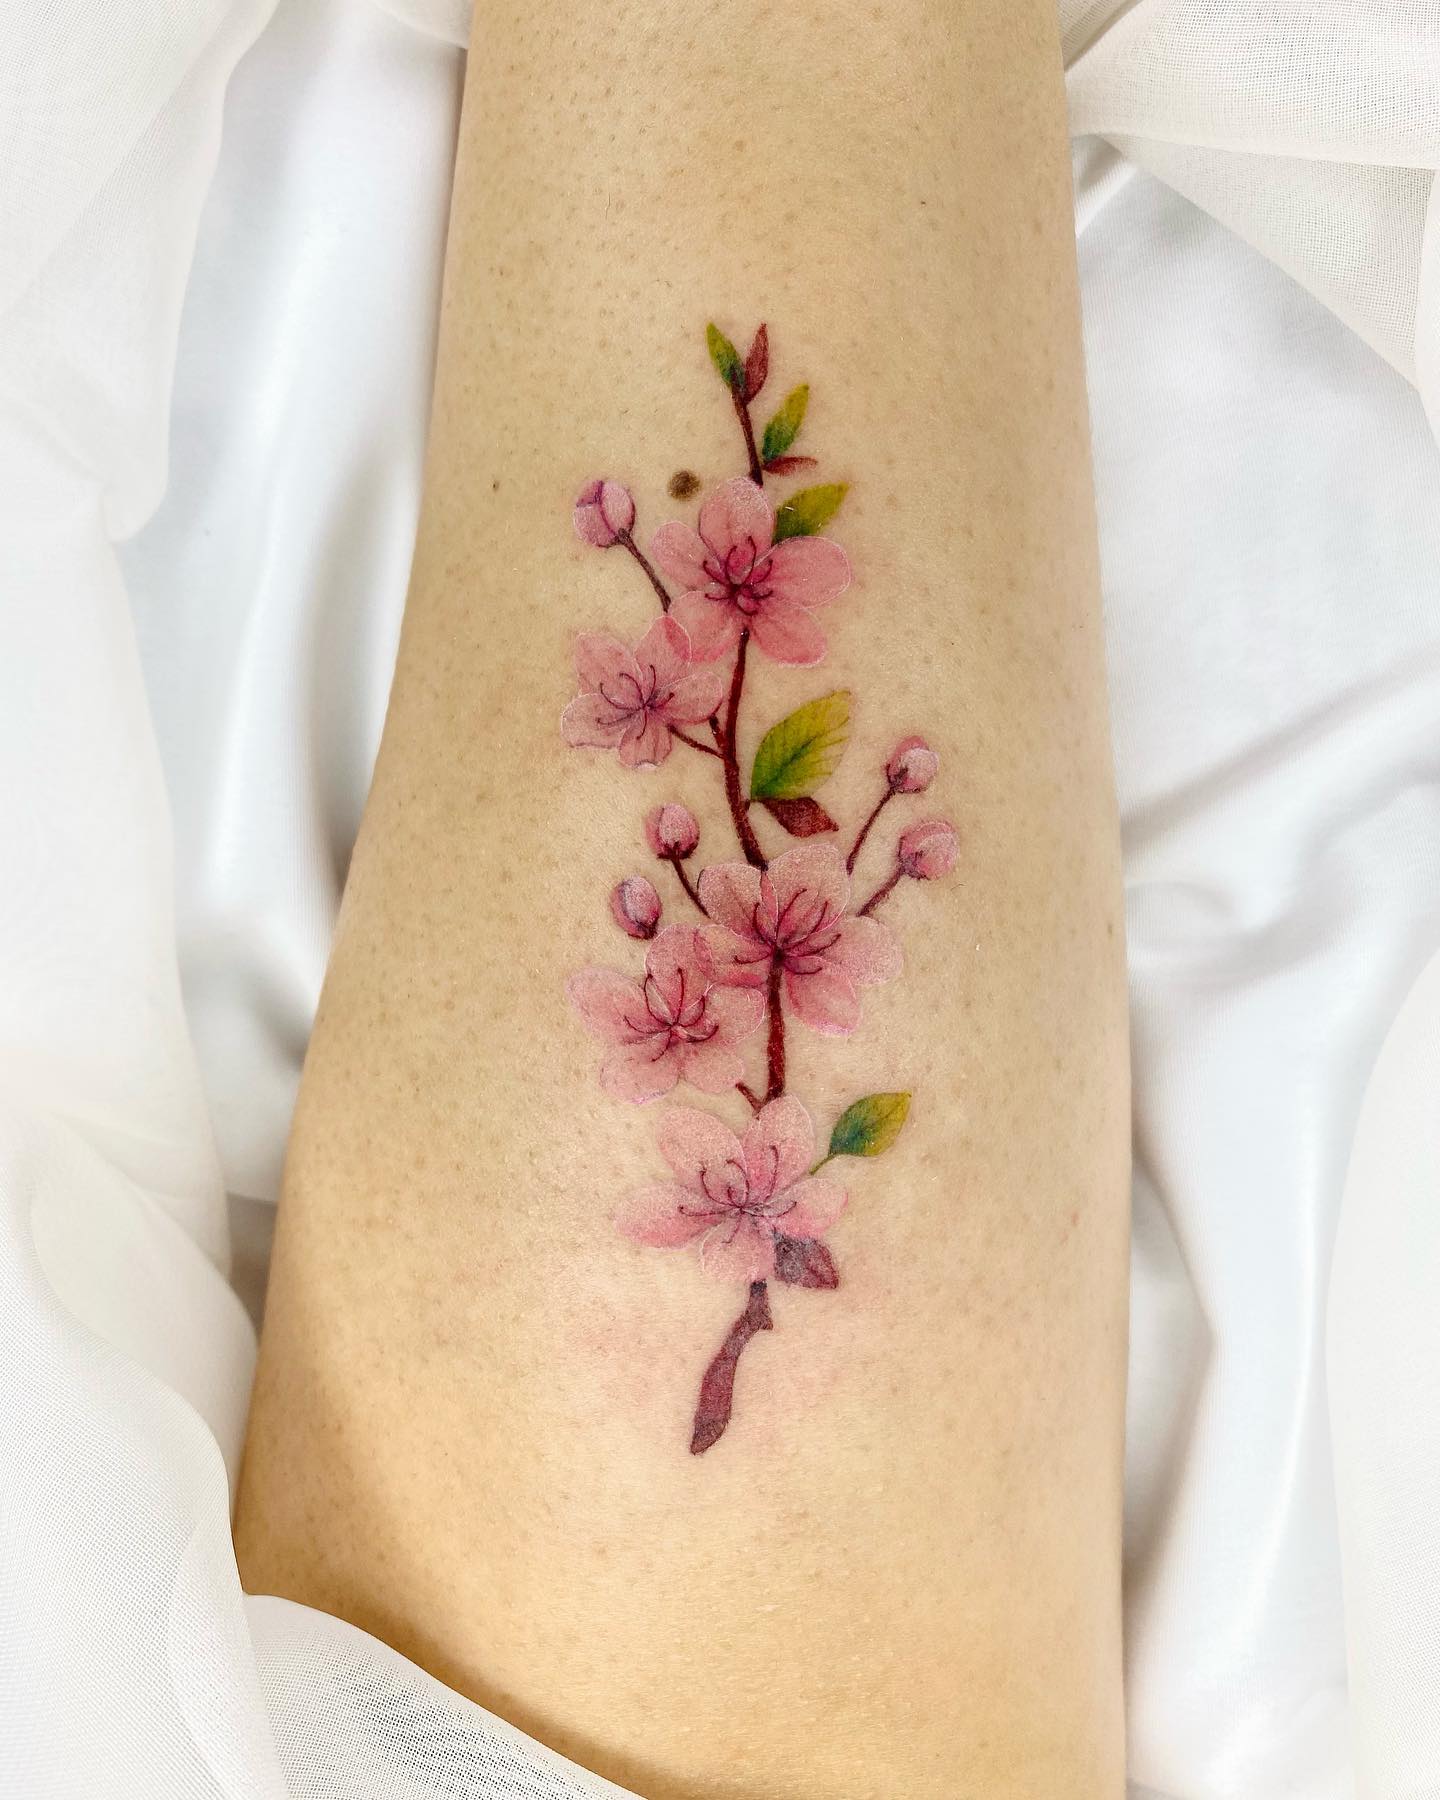 Tatuaje femenino de flor de cerezo